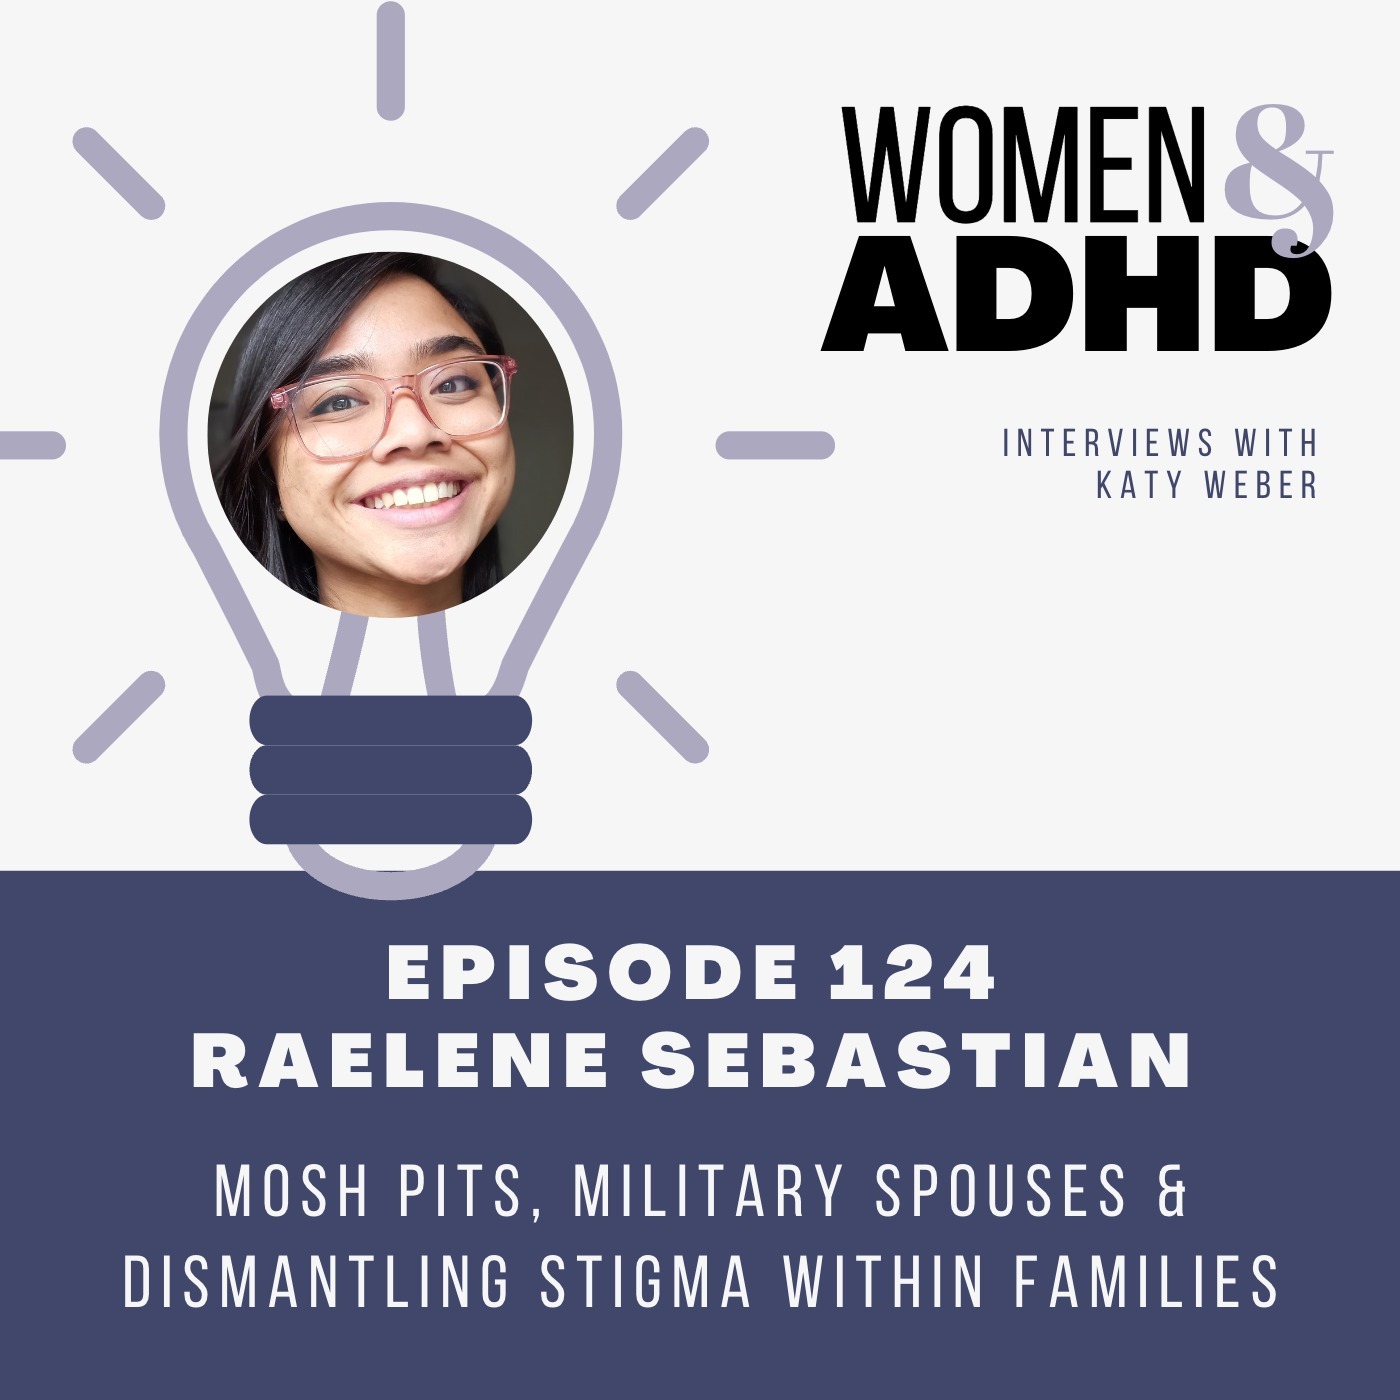 Raelene Sebastian: Mosh pits, military spouses & dismantling stigma within families